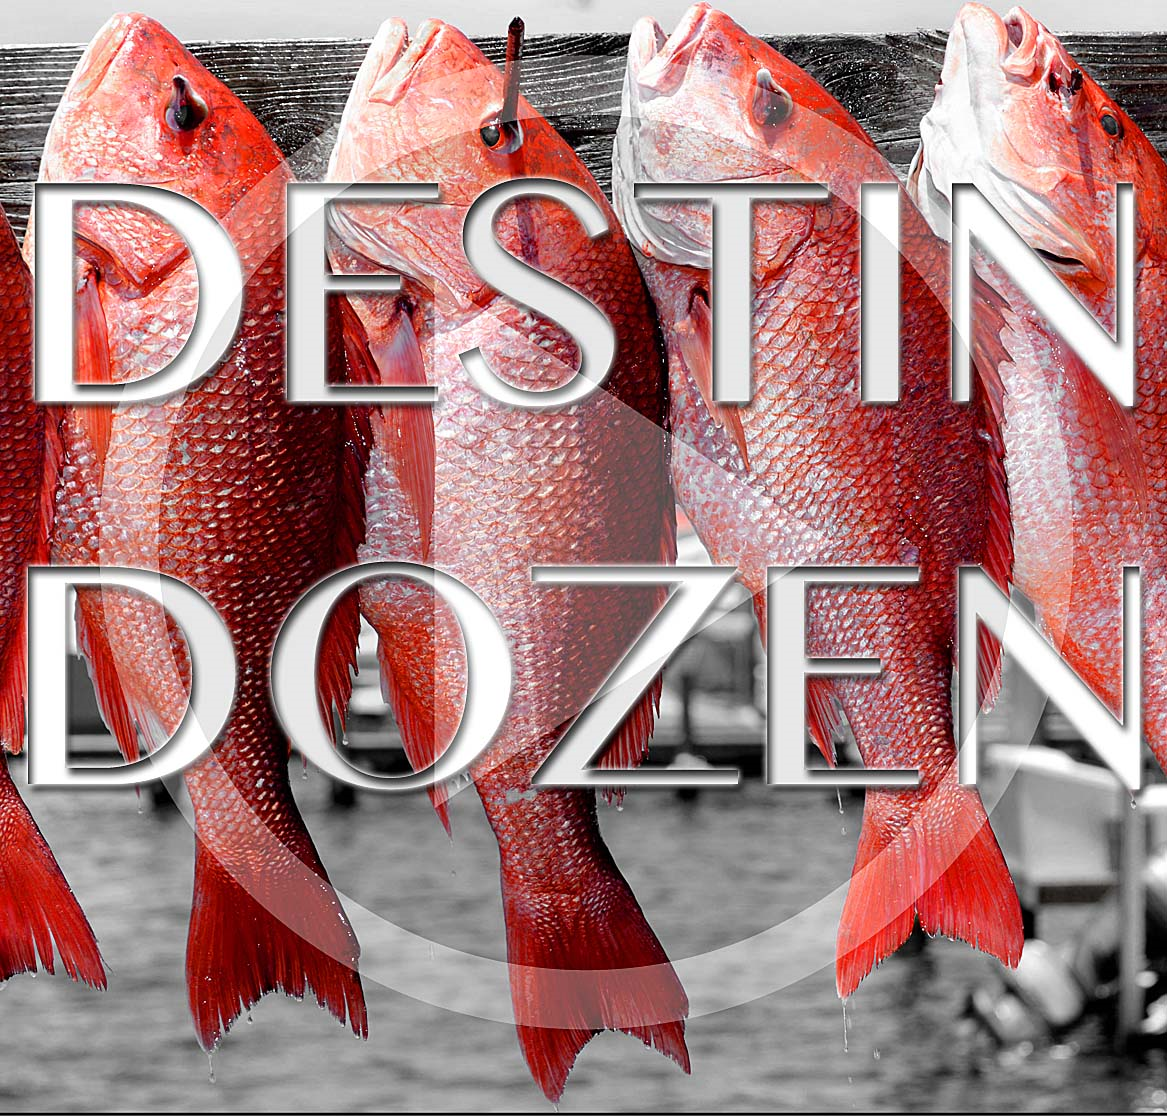 Destin Dozen Episode 13: WWII aircraft, statues and fishing tournaments